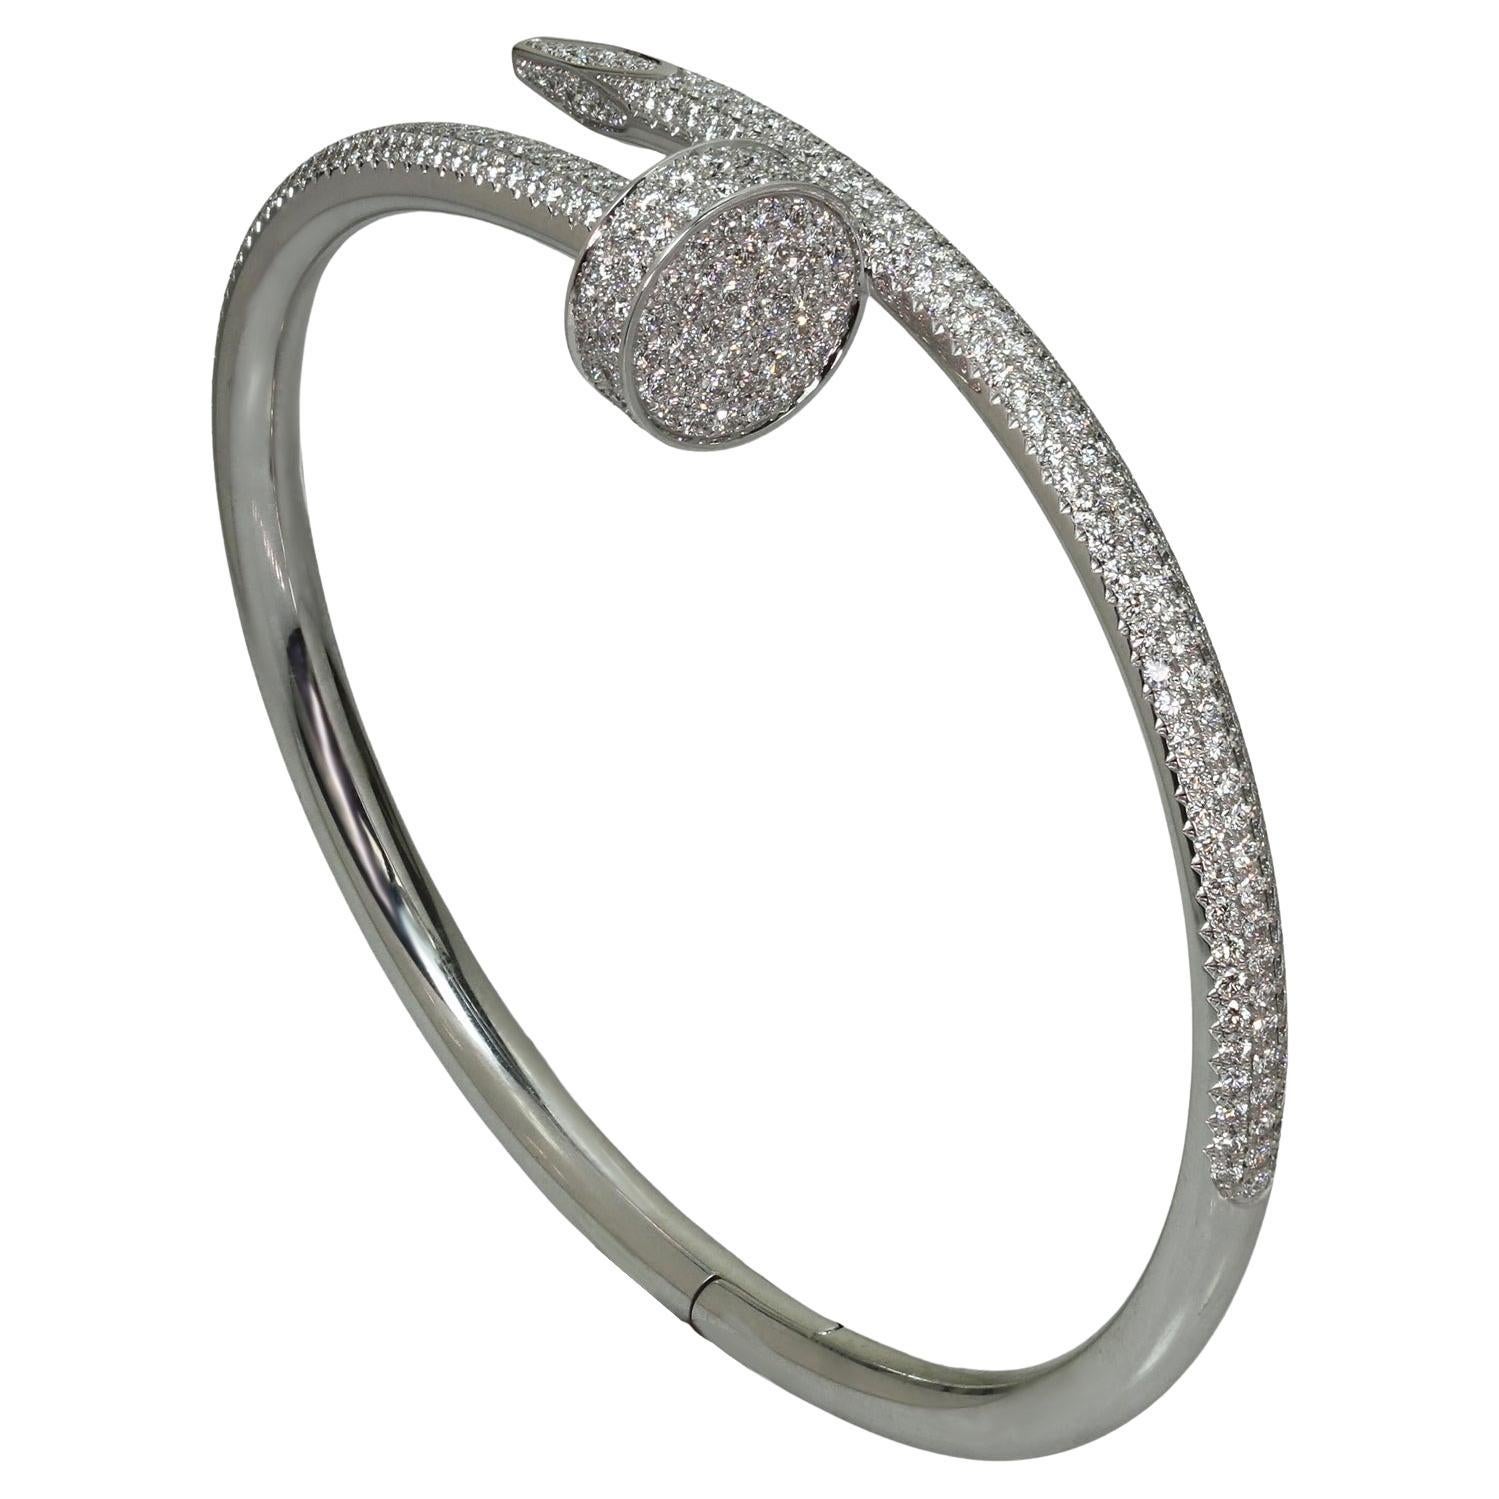 Details more than 123 cartier nail bracelet silver best